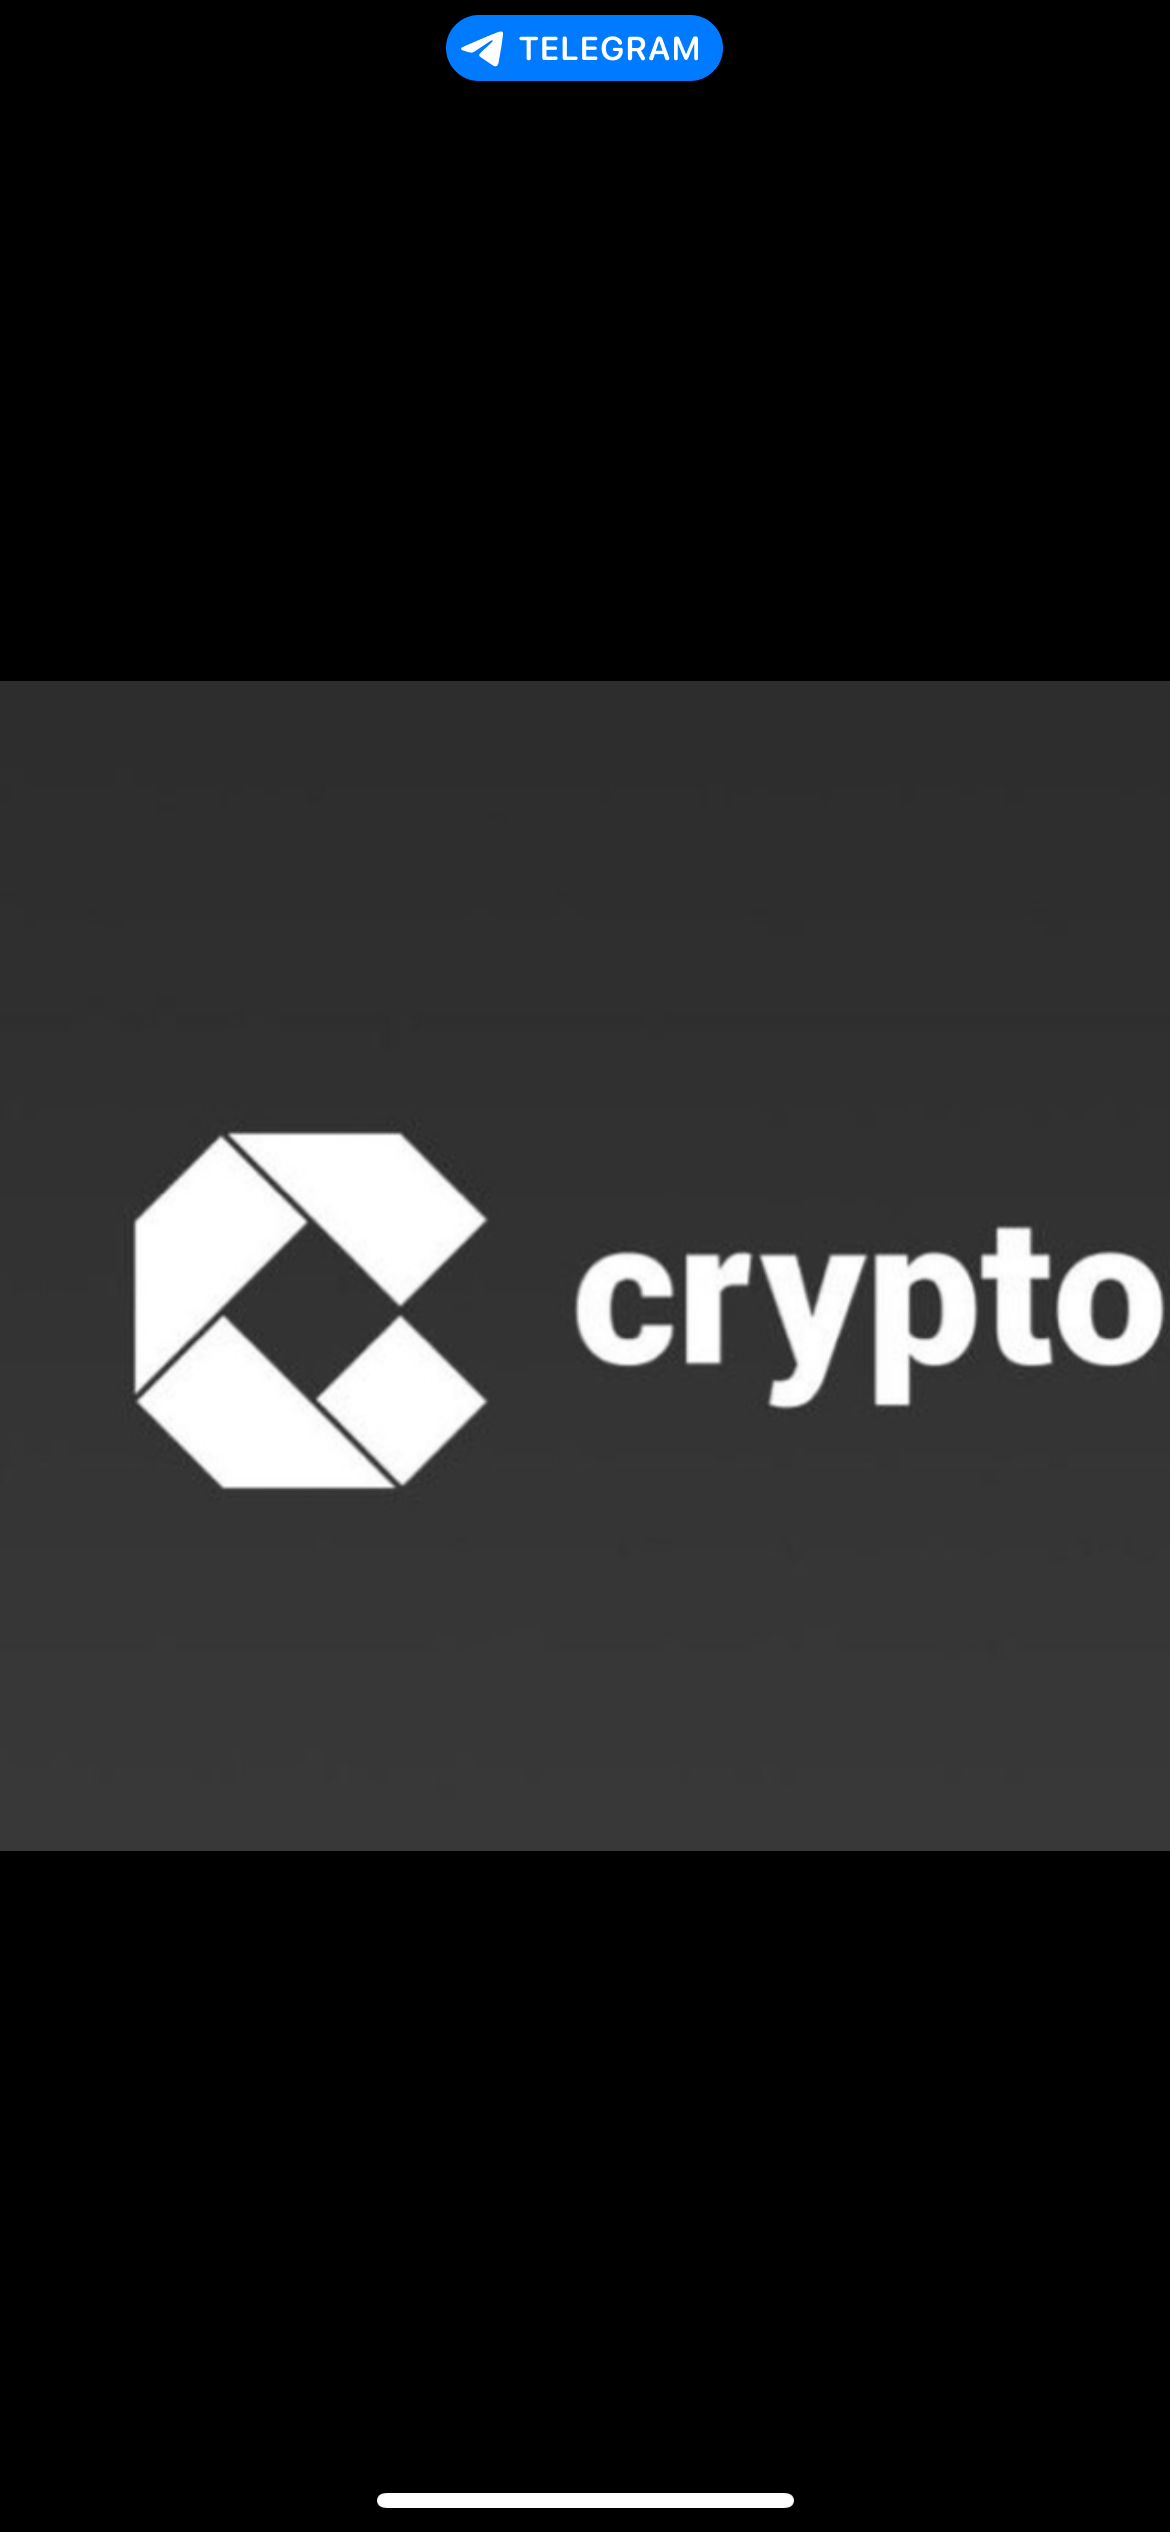 CryptoNewsRu|work|p2p